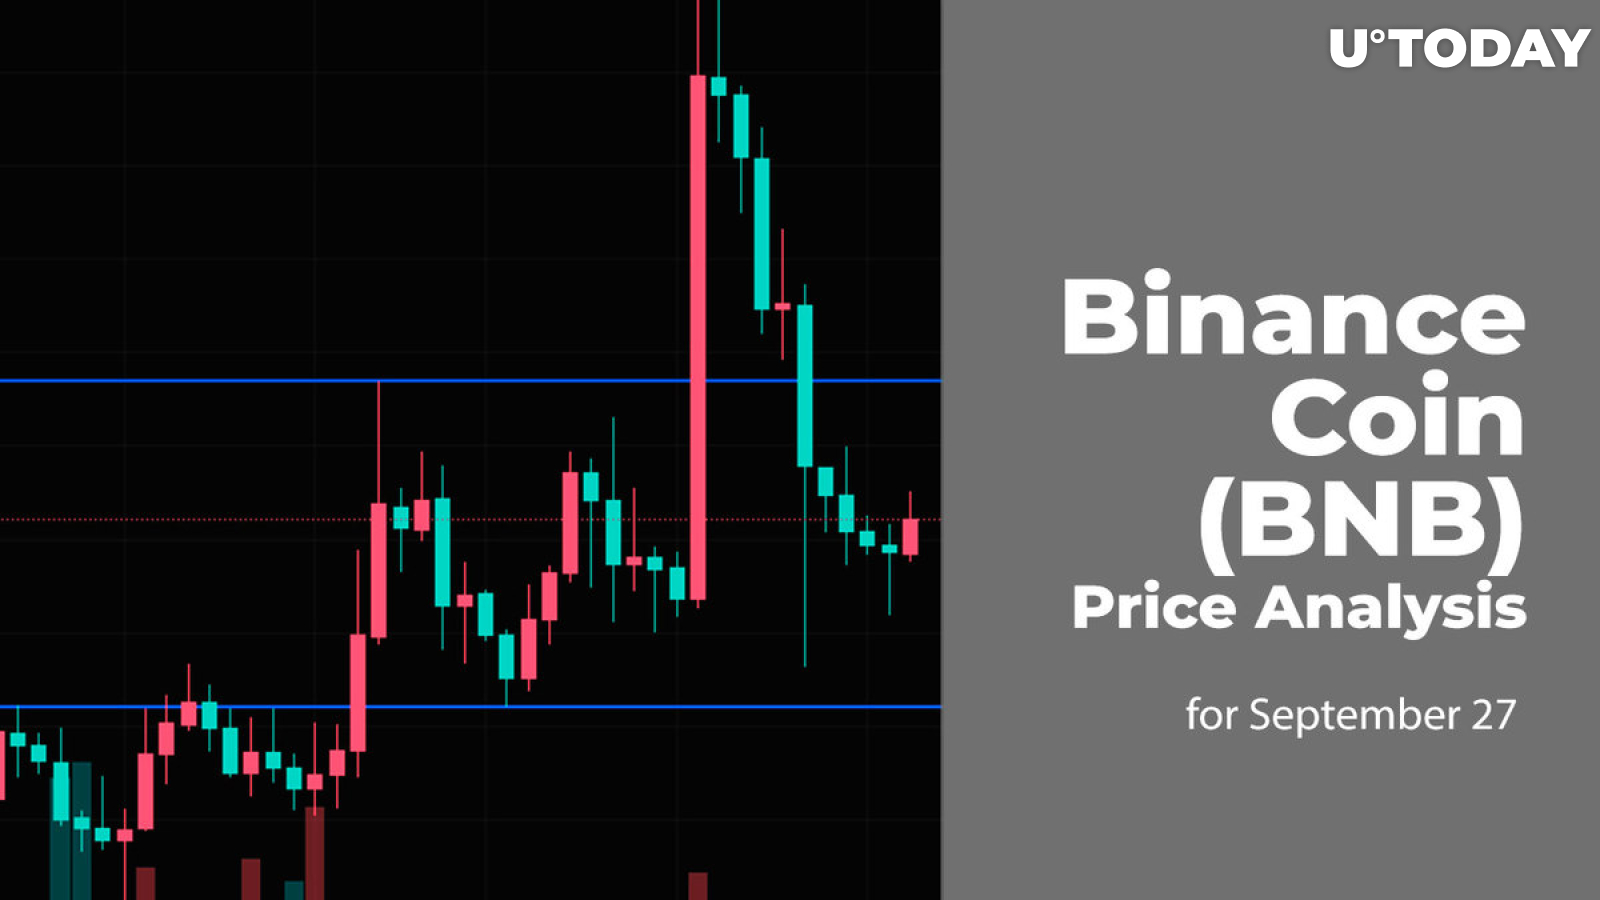 Binance Coin (BNB) Price Analysis for September 27